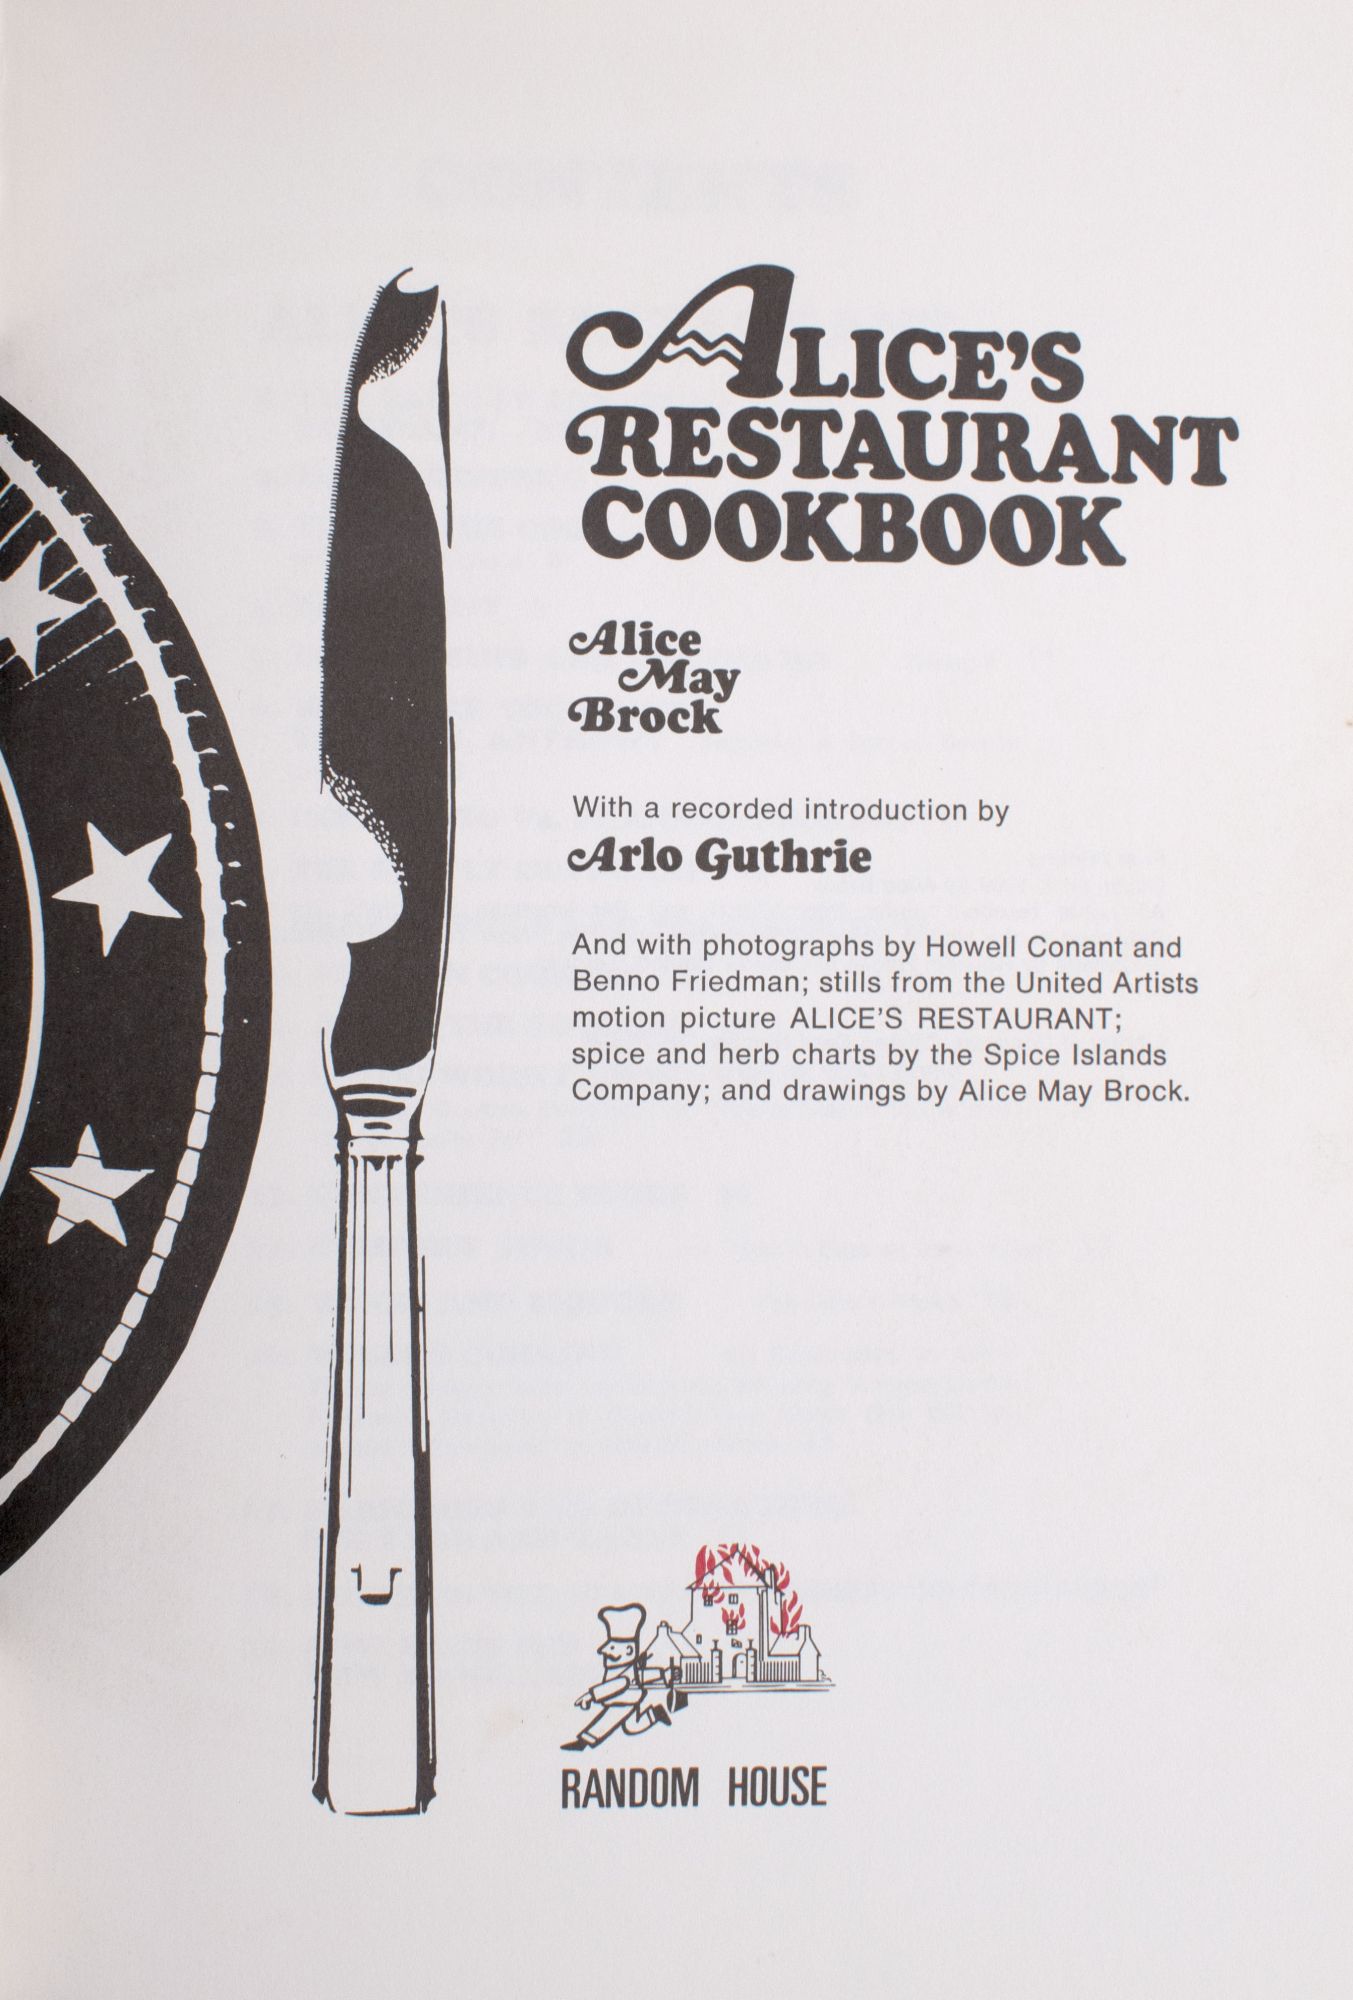 Vintage cookbook Alices Restaurant Arlo Guthrie record dust